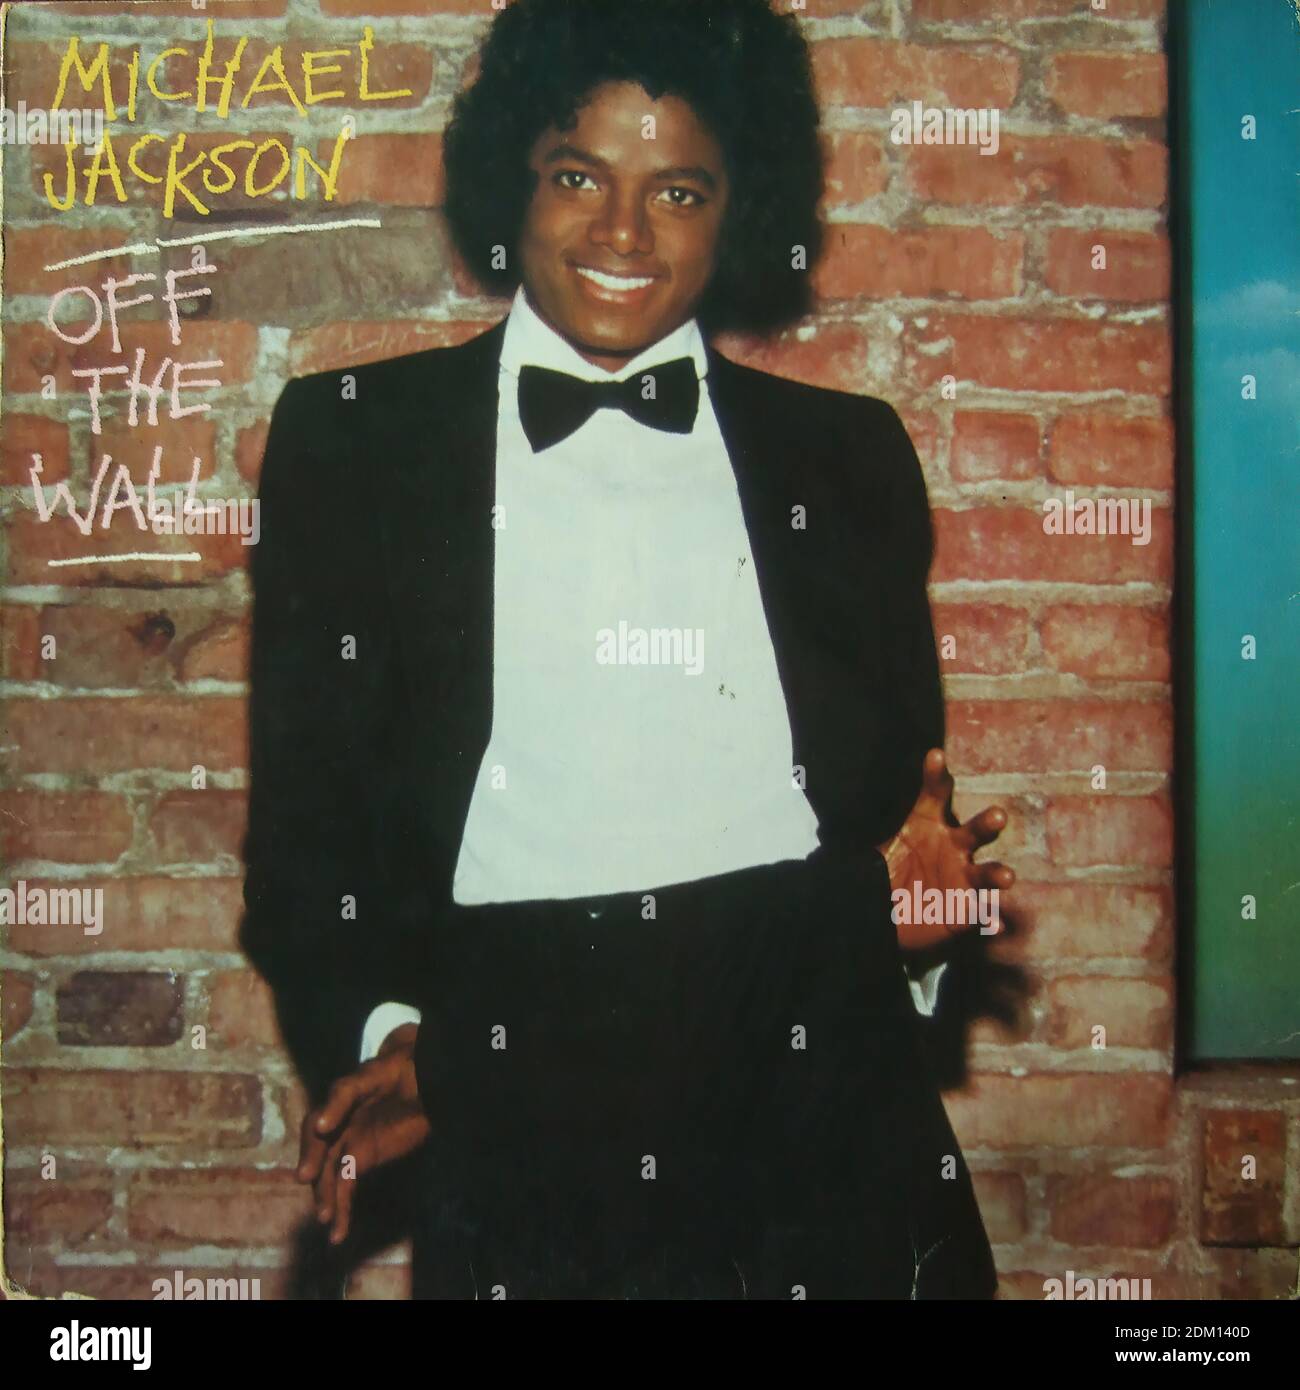 Michael Jackson - Off The Wall - Vintage vinyl album cover Stock Photo -  Alamy